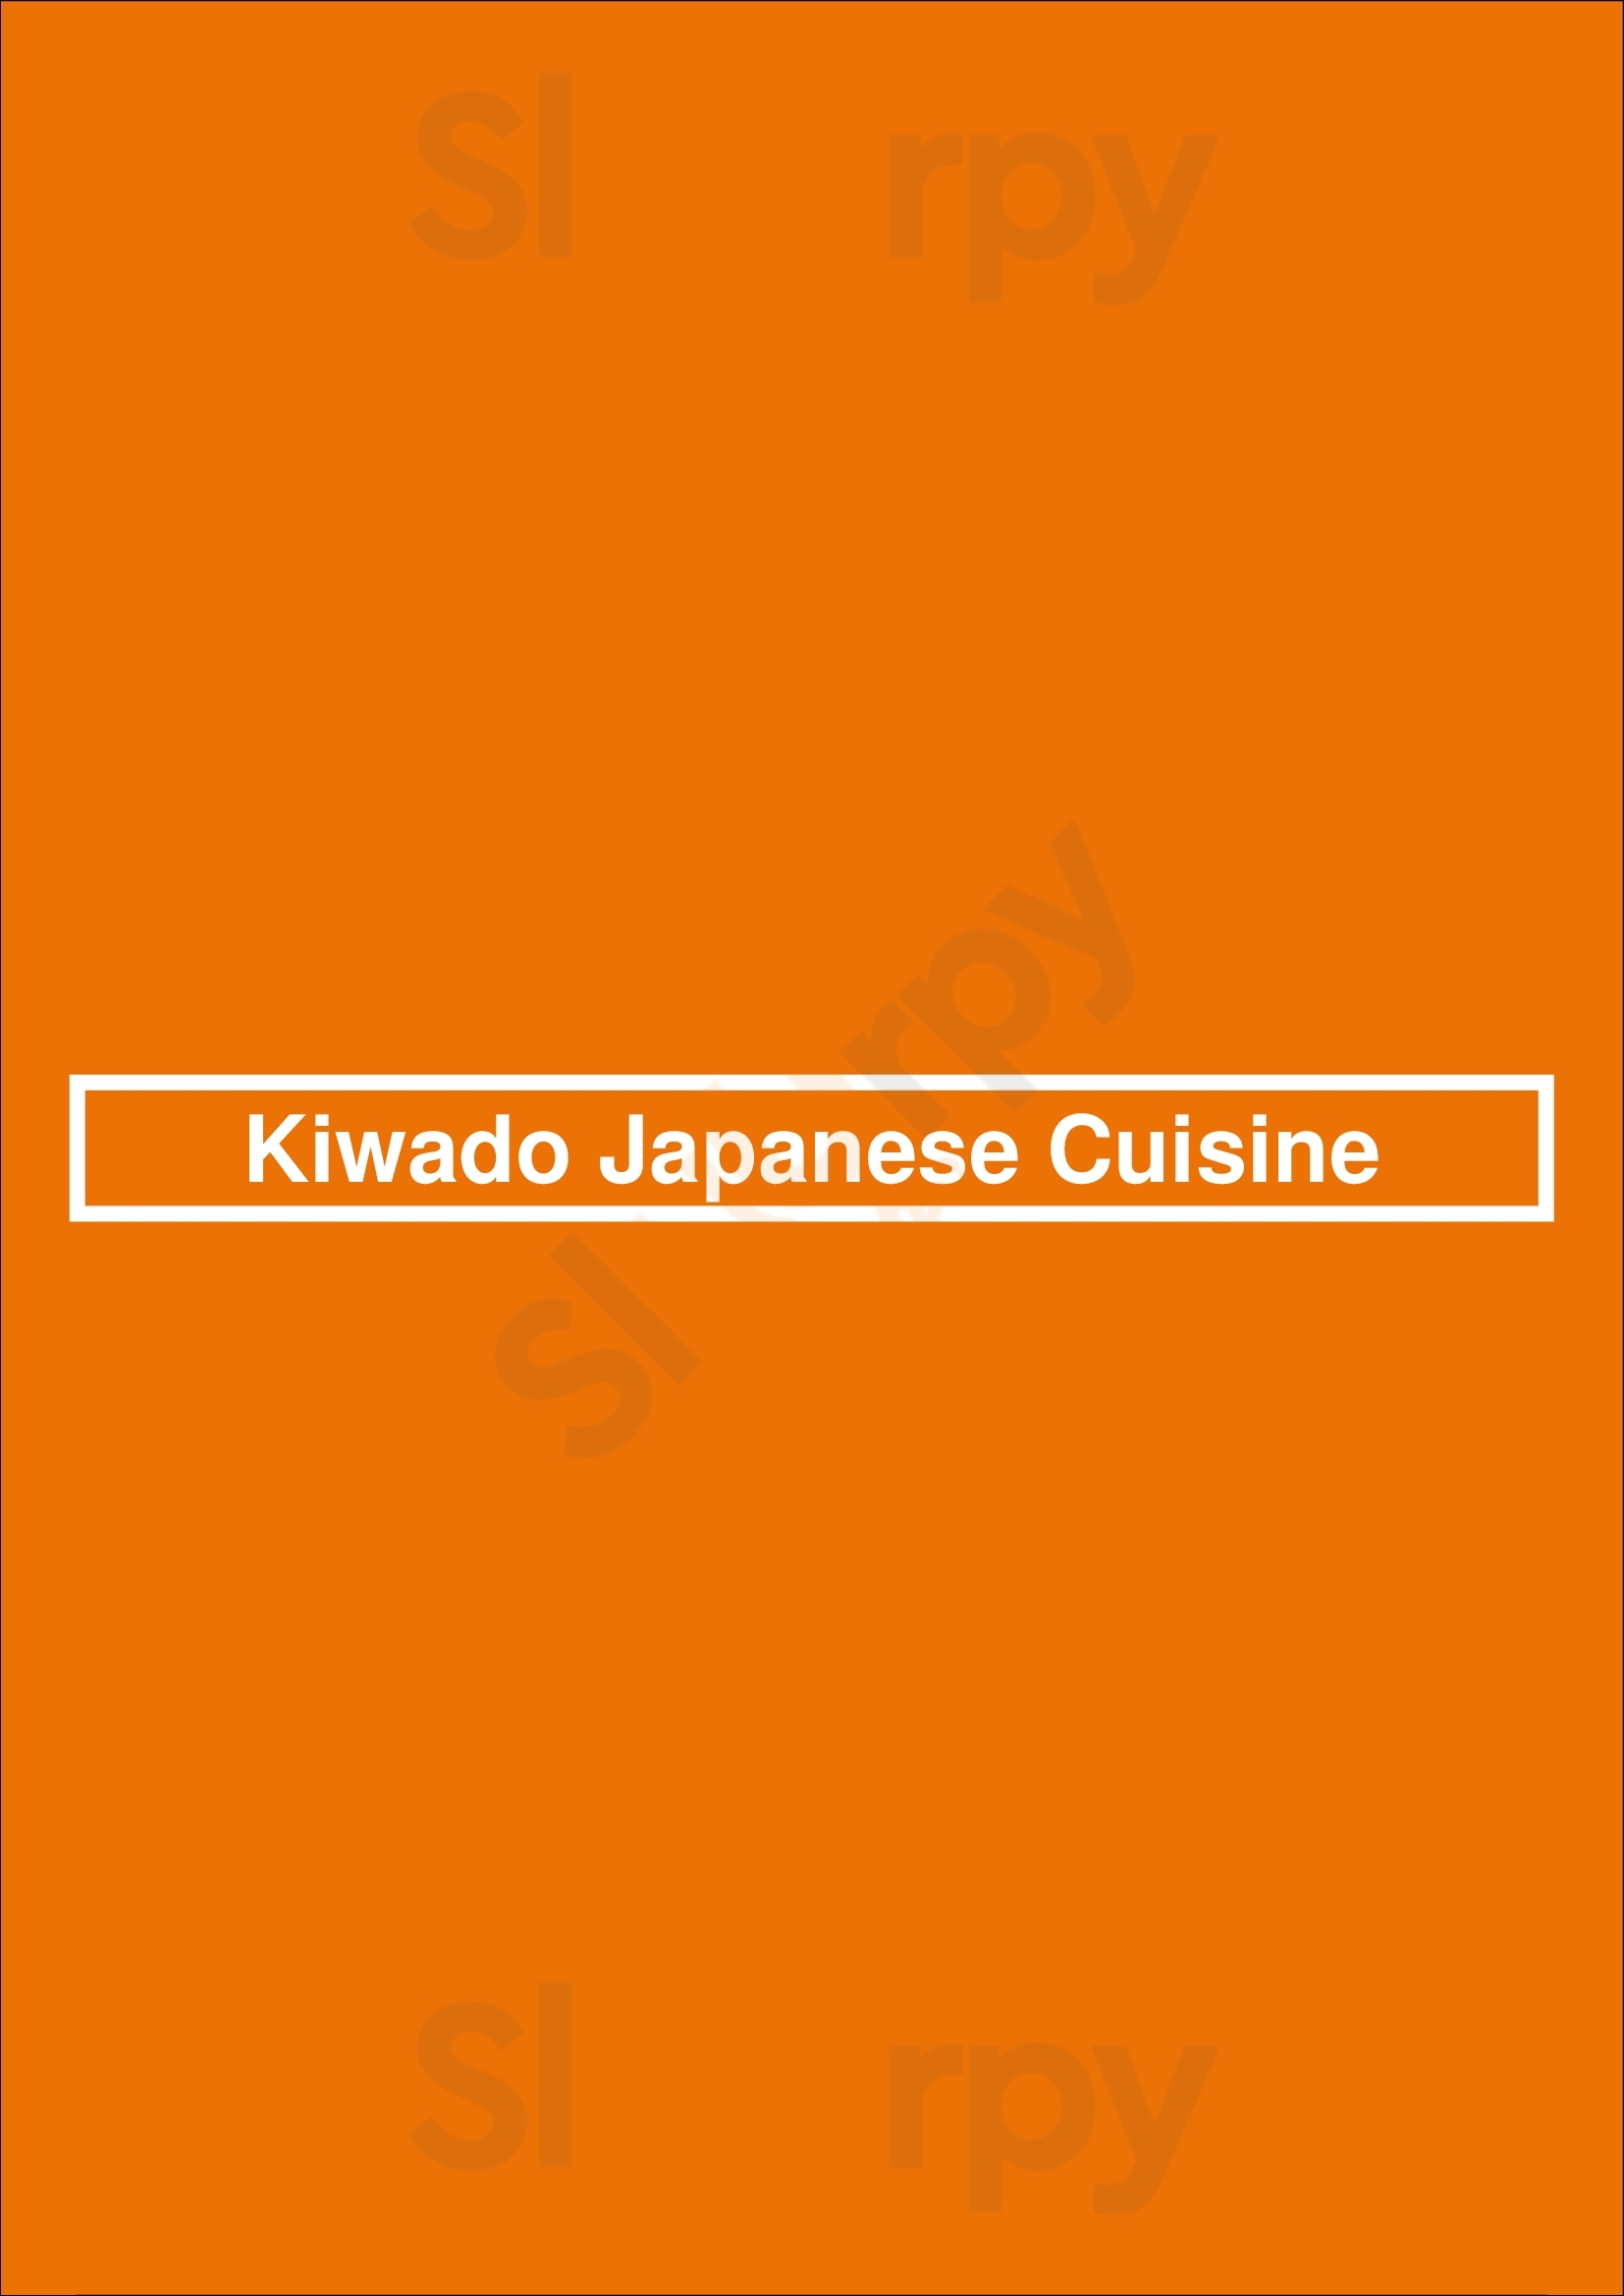 Kiwado Japanese Cuisine Edmonton Menu - 1